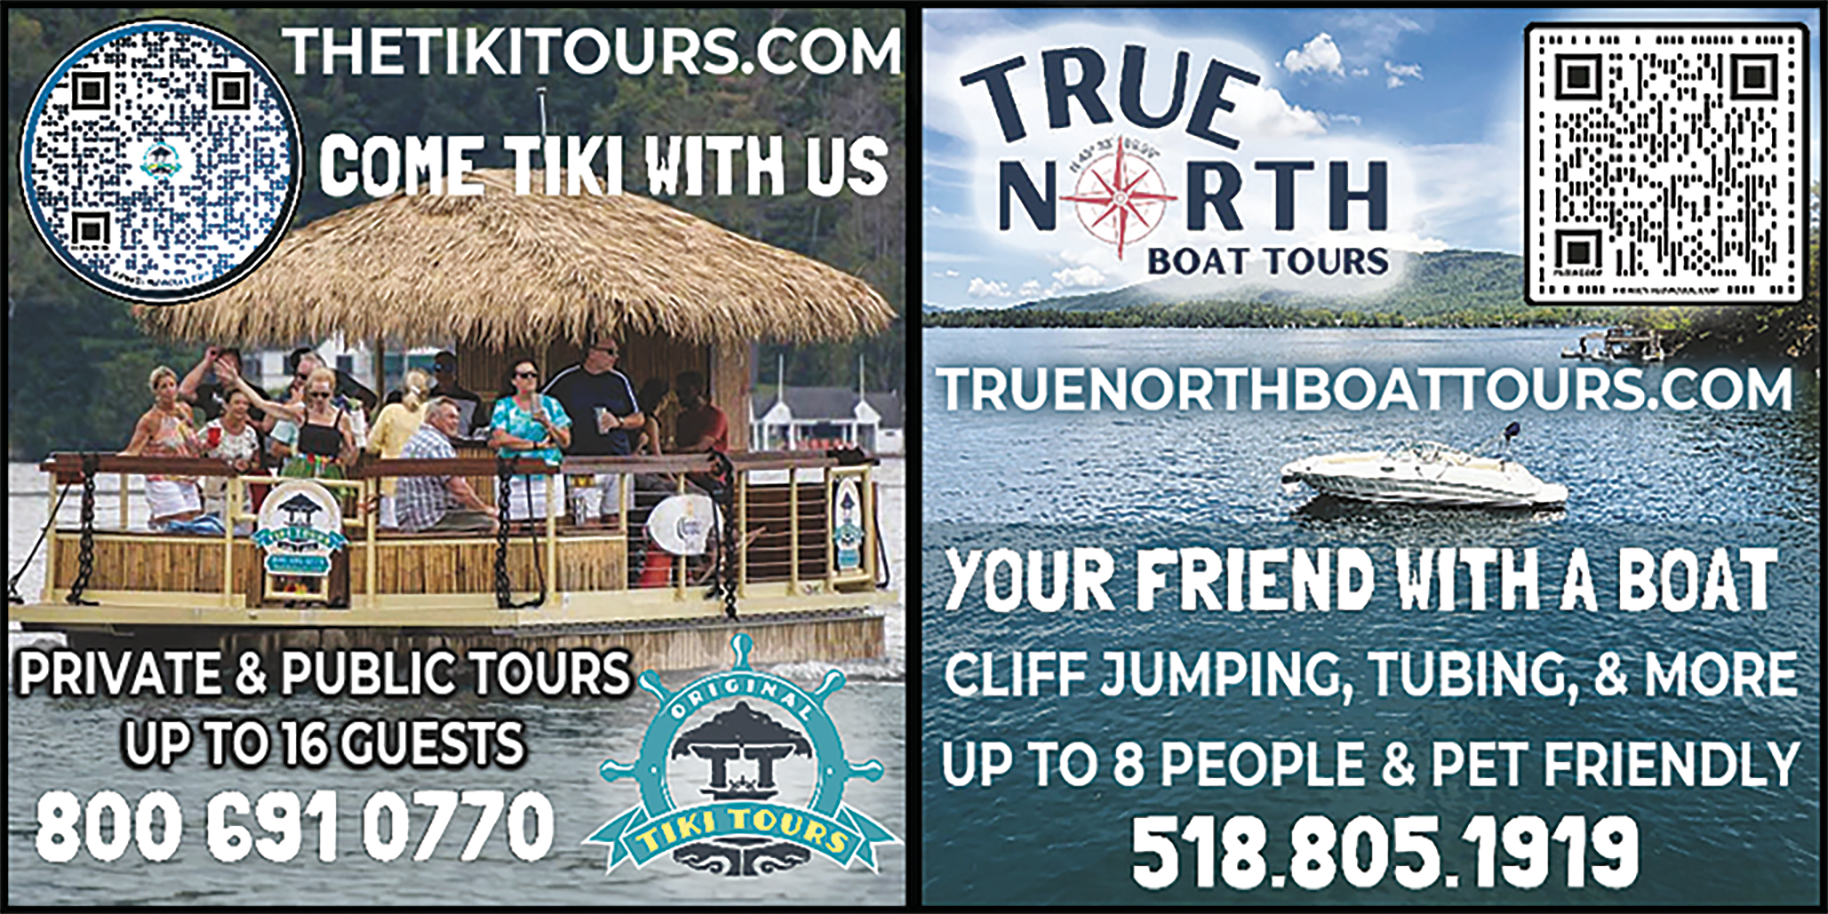 True North Boat Tours/Tiki Tours Print Ad